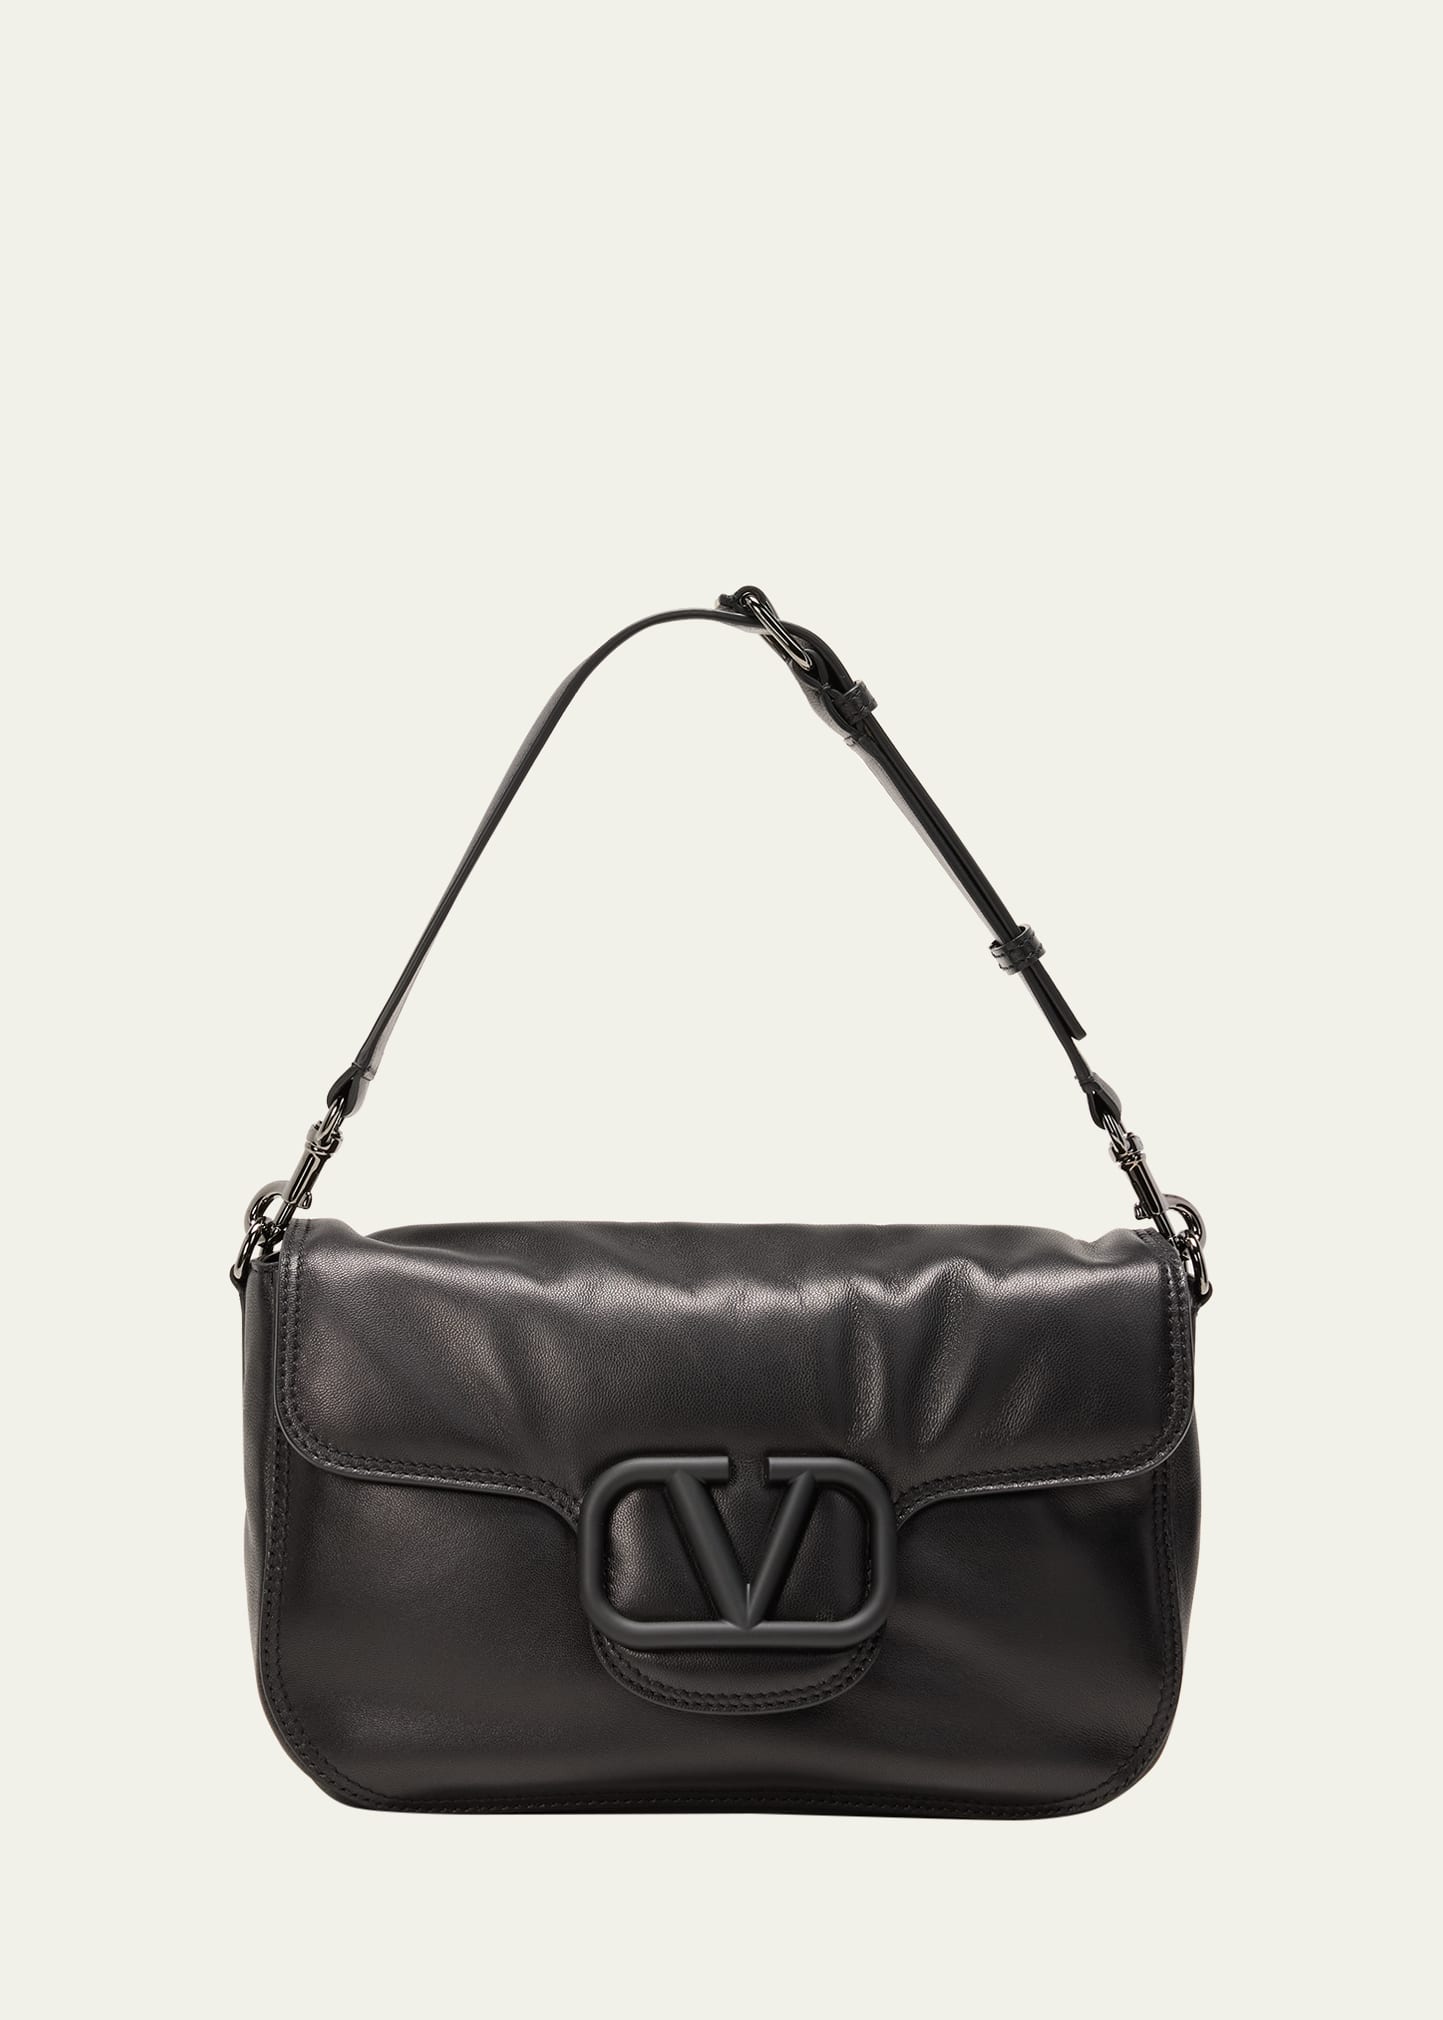 Valentino Garavani Men's All Time Noir Leather Shoulder Bag In Nero